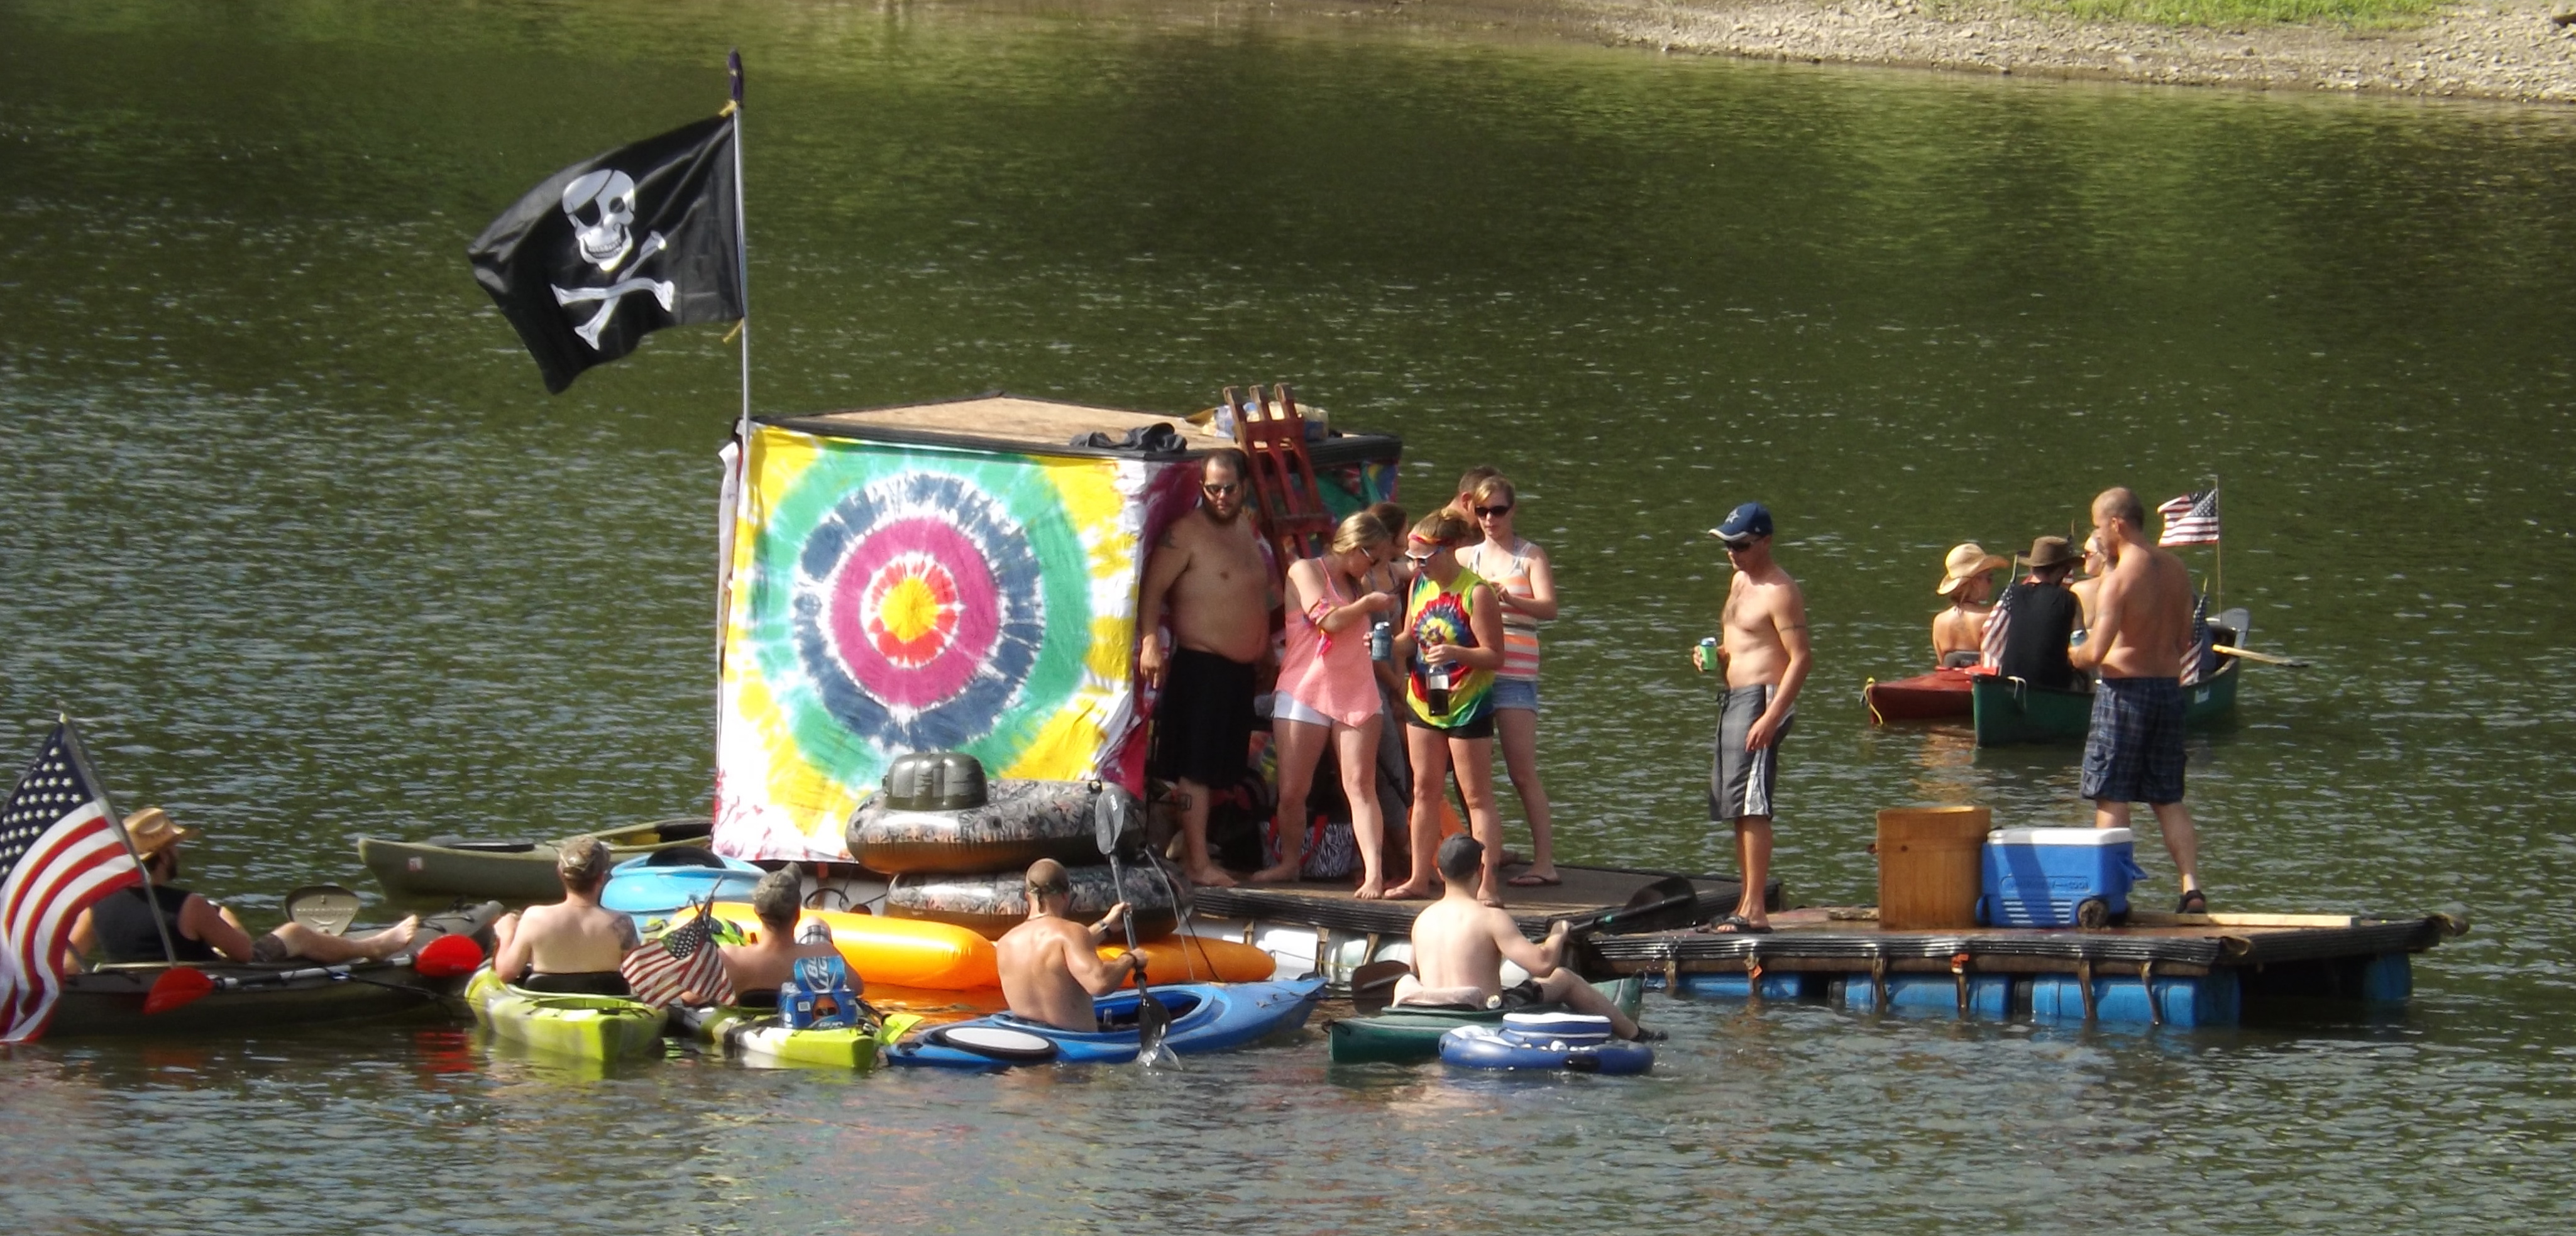 Rieger Regatta an annual event on the Susquehanna River